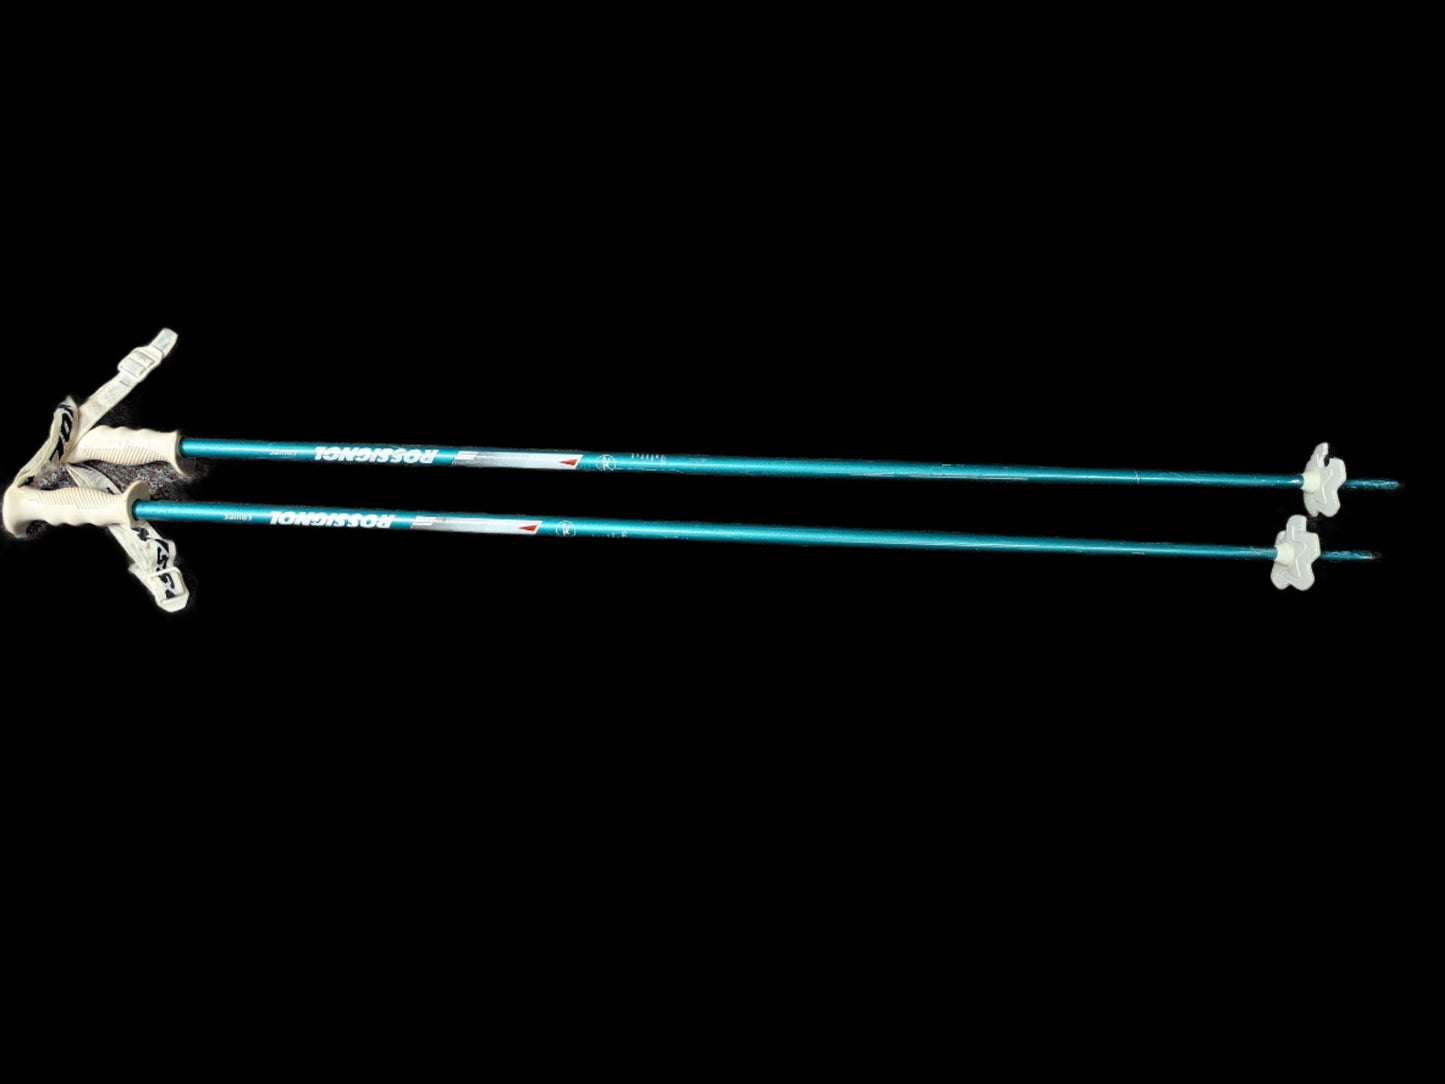 Rossignol Equipe Ski Poles Size 125 Cm Color Blue Condition Used